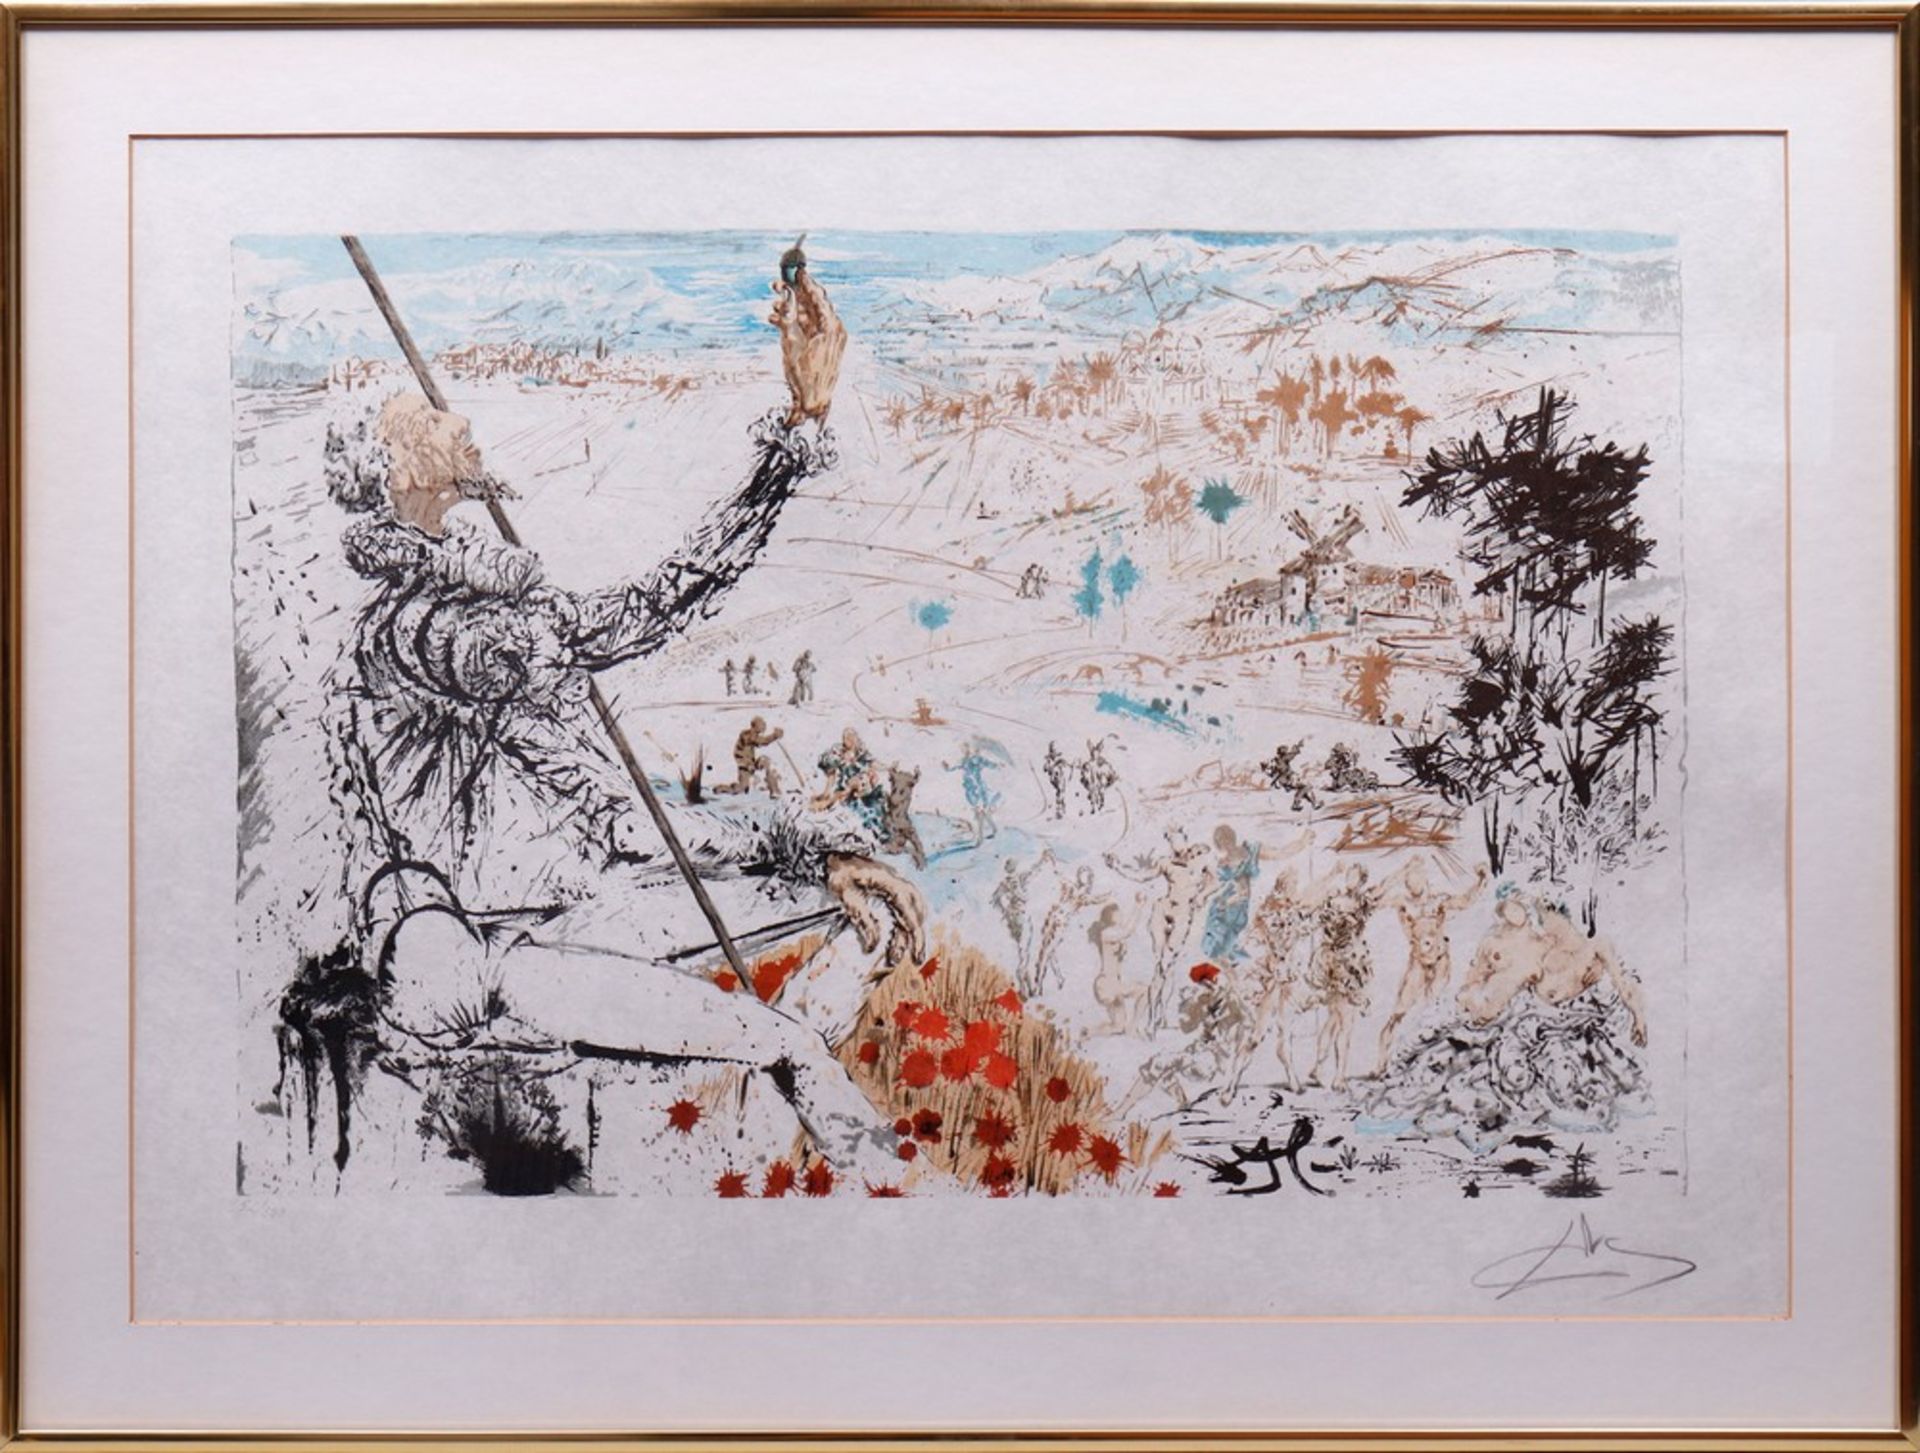 Salvador Felipe Jacinto Dalí i Domènech (1904, Figueres, Catalonia - 1989, ibid.)